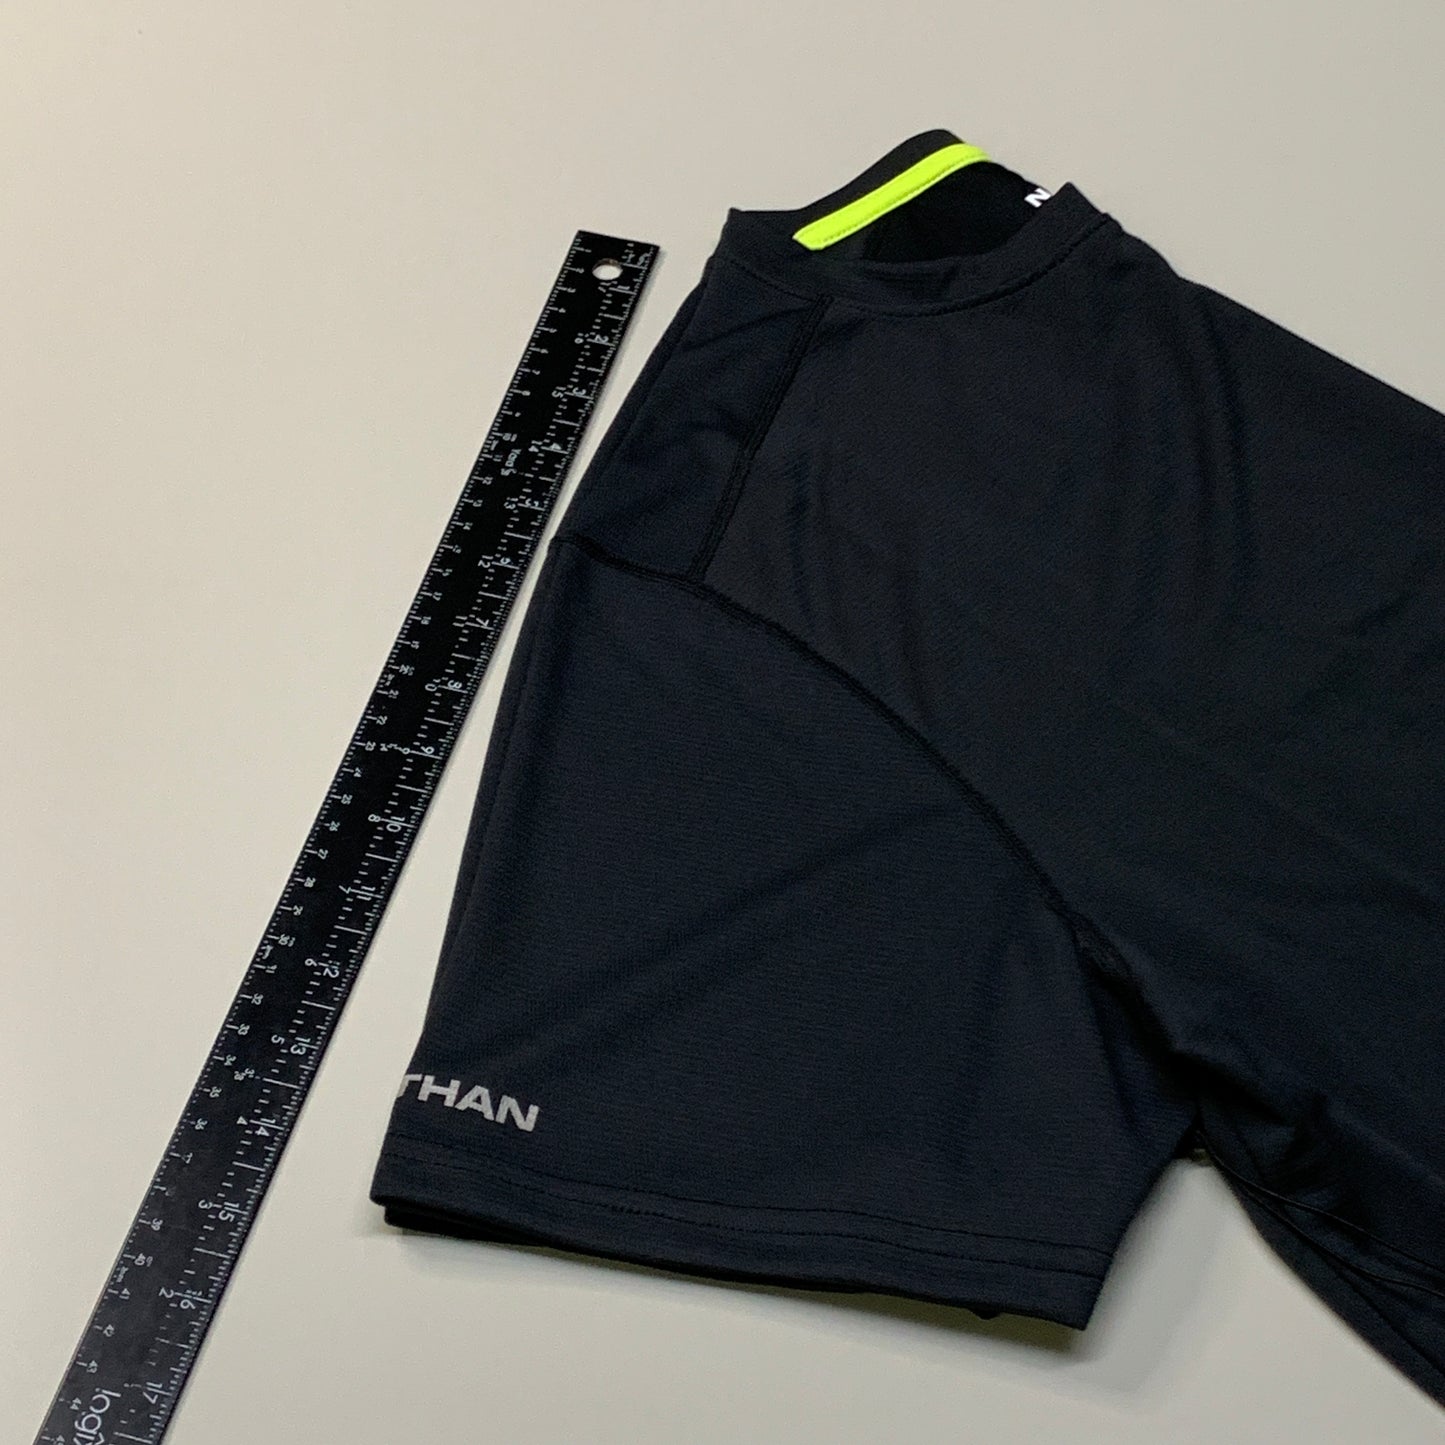 NATHAN Raise Short Sleeve Shirt Tee 2.0 Men's Black Size XL NS50880-00001-XL